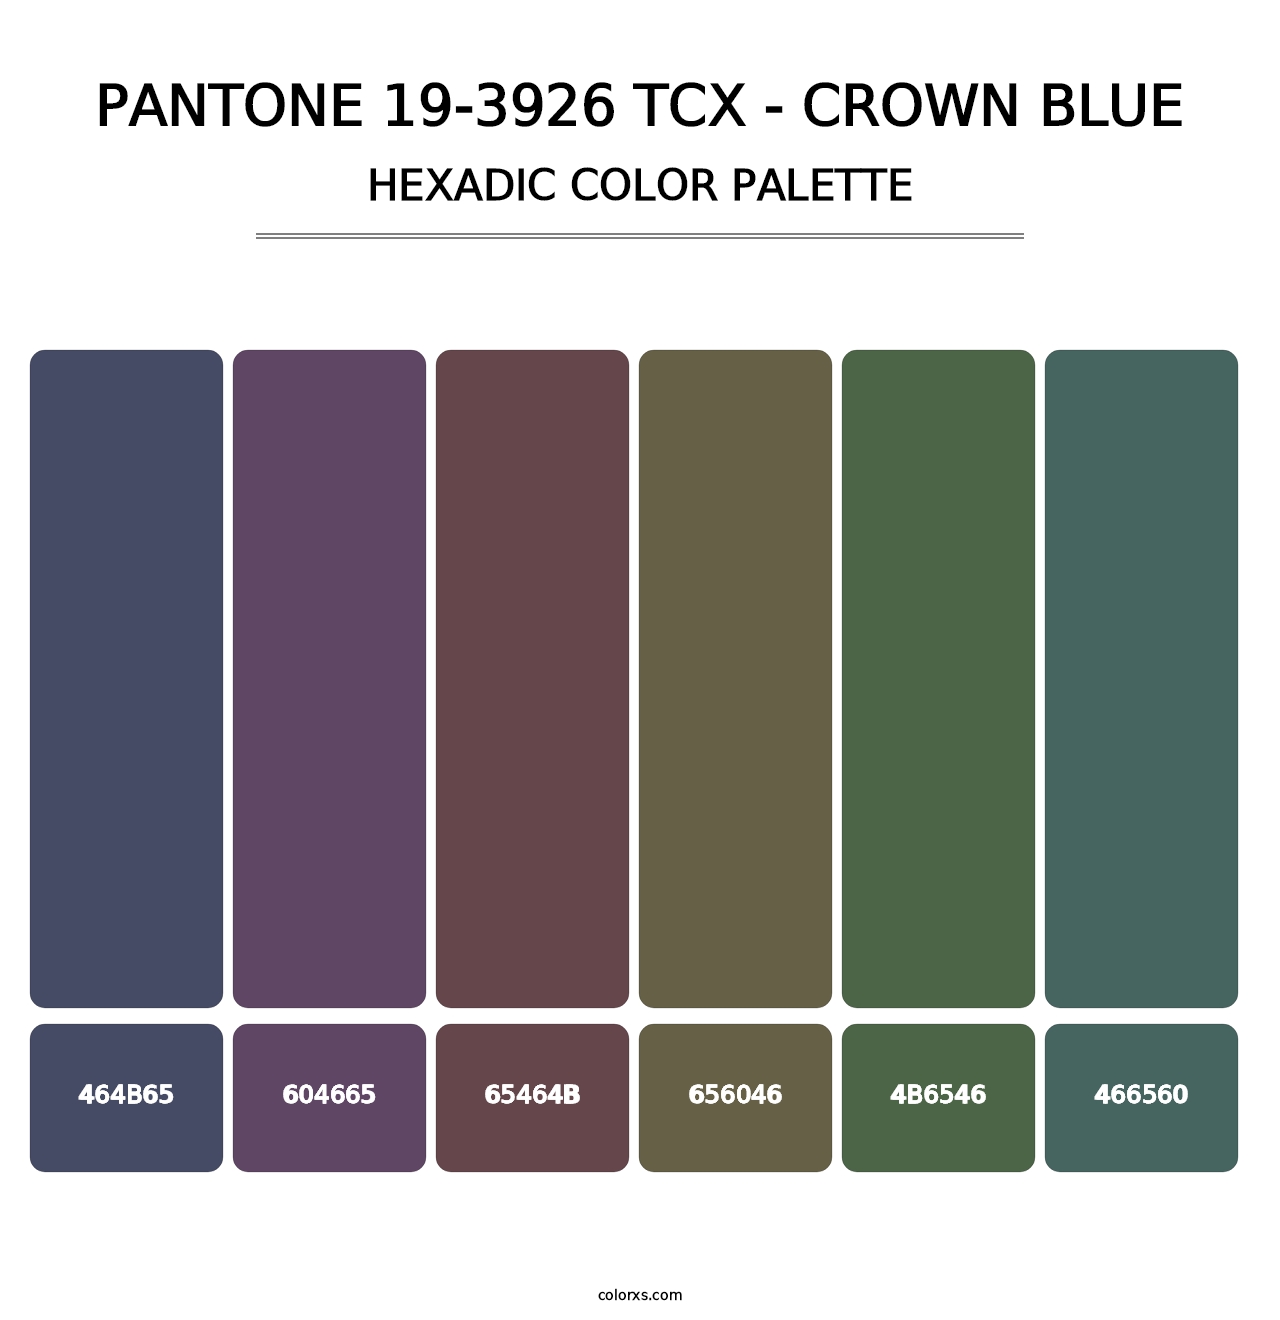 PANTONE 19-3926 TCX - Crown Blue - Hexadic Color Palette